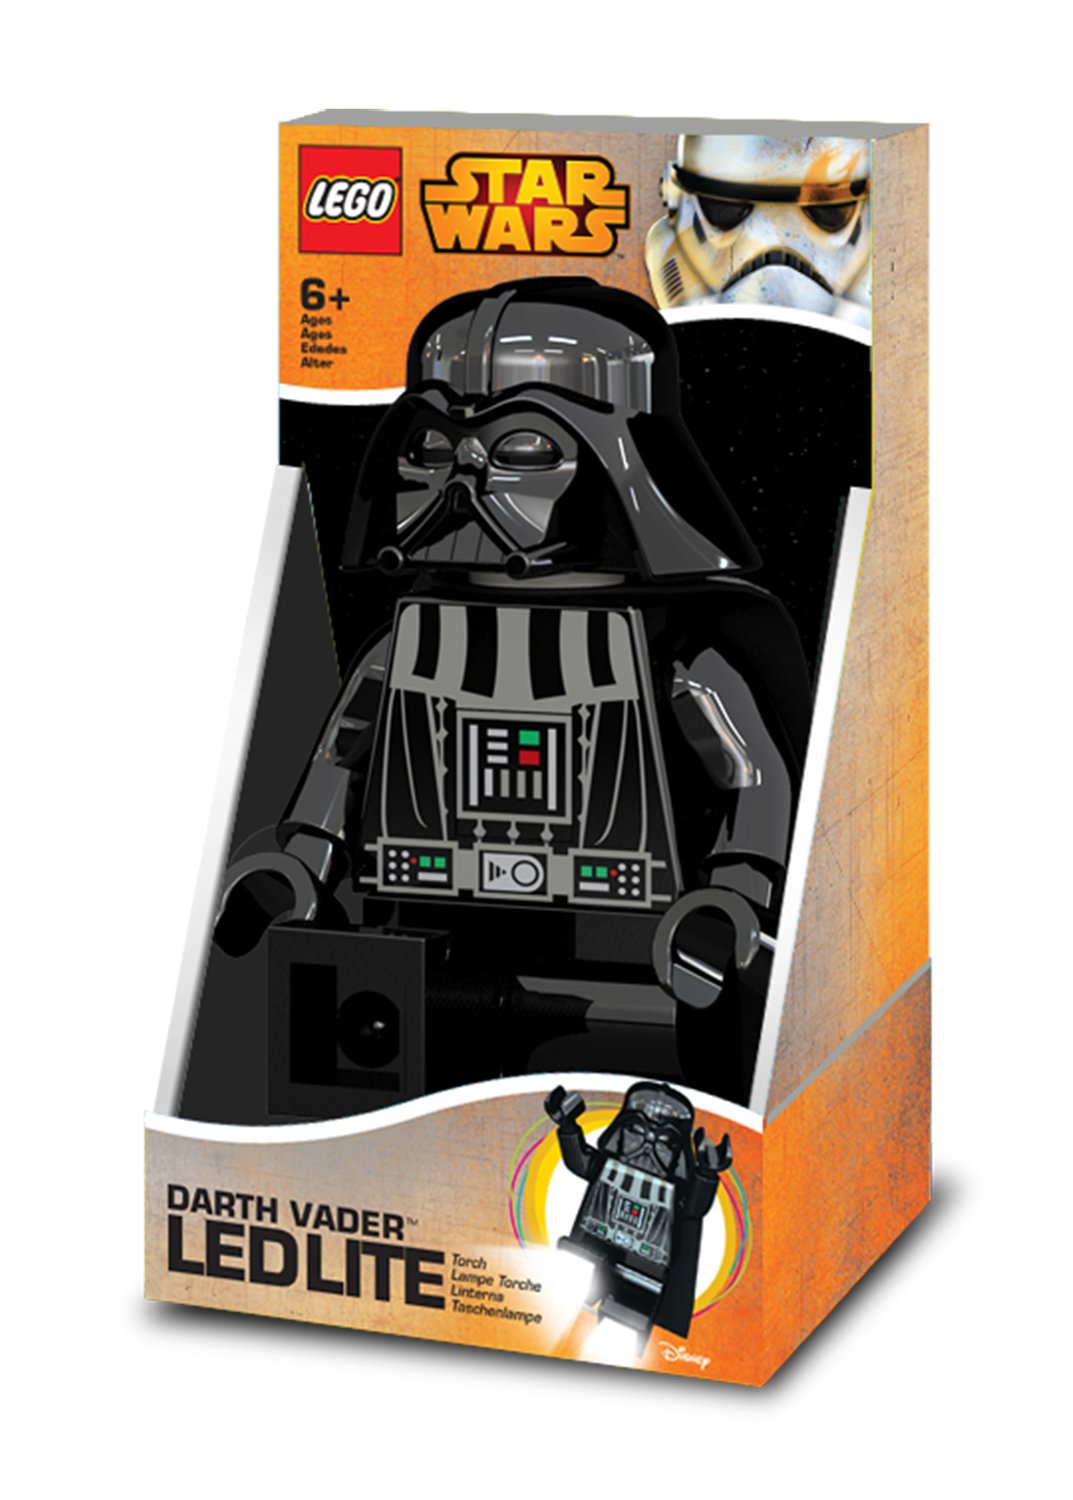 Lego Star Wars Mini Torch, 7.6 Cm, Darth Vader - 20 Cm